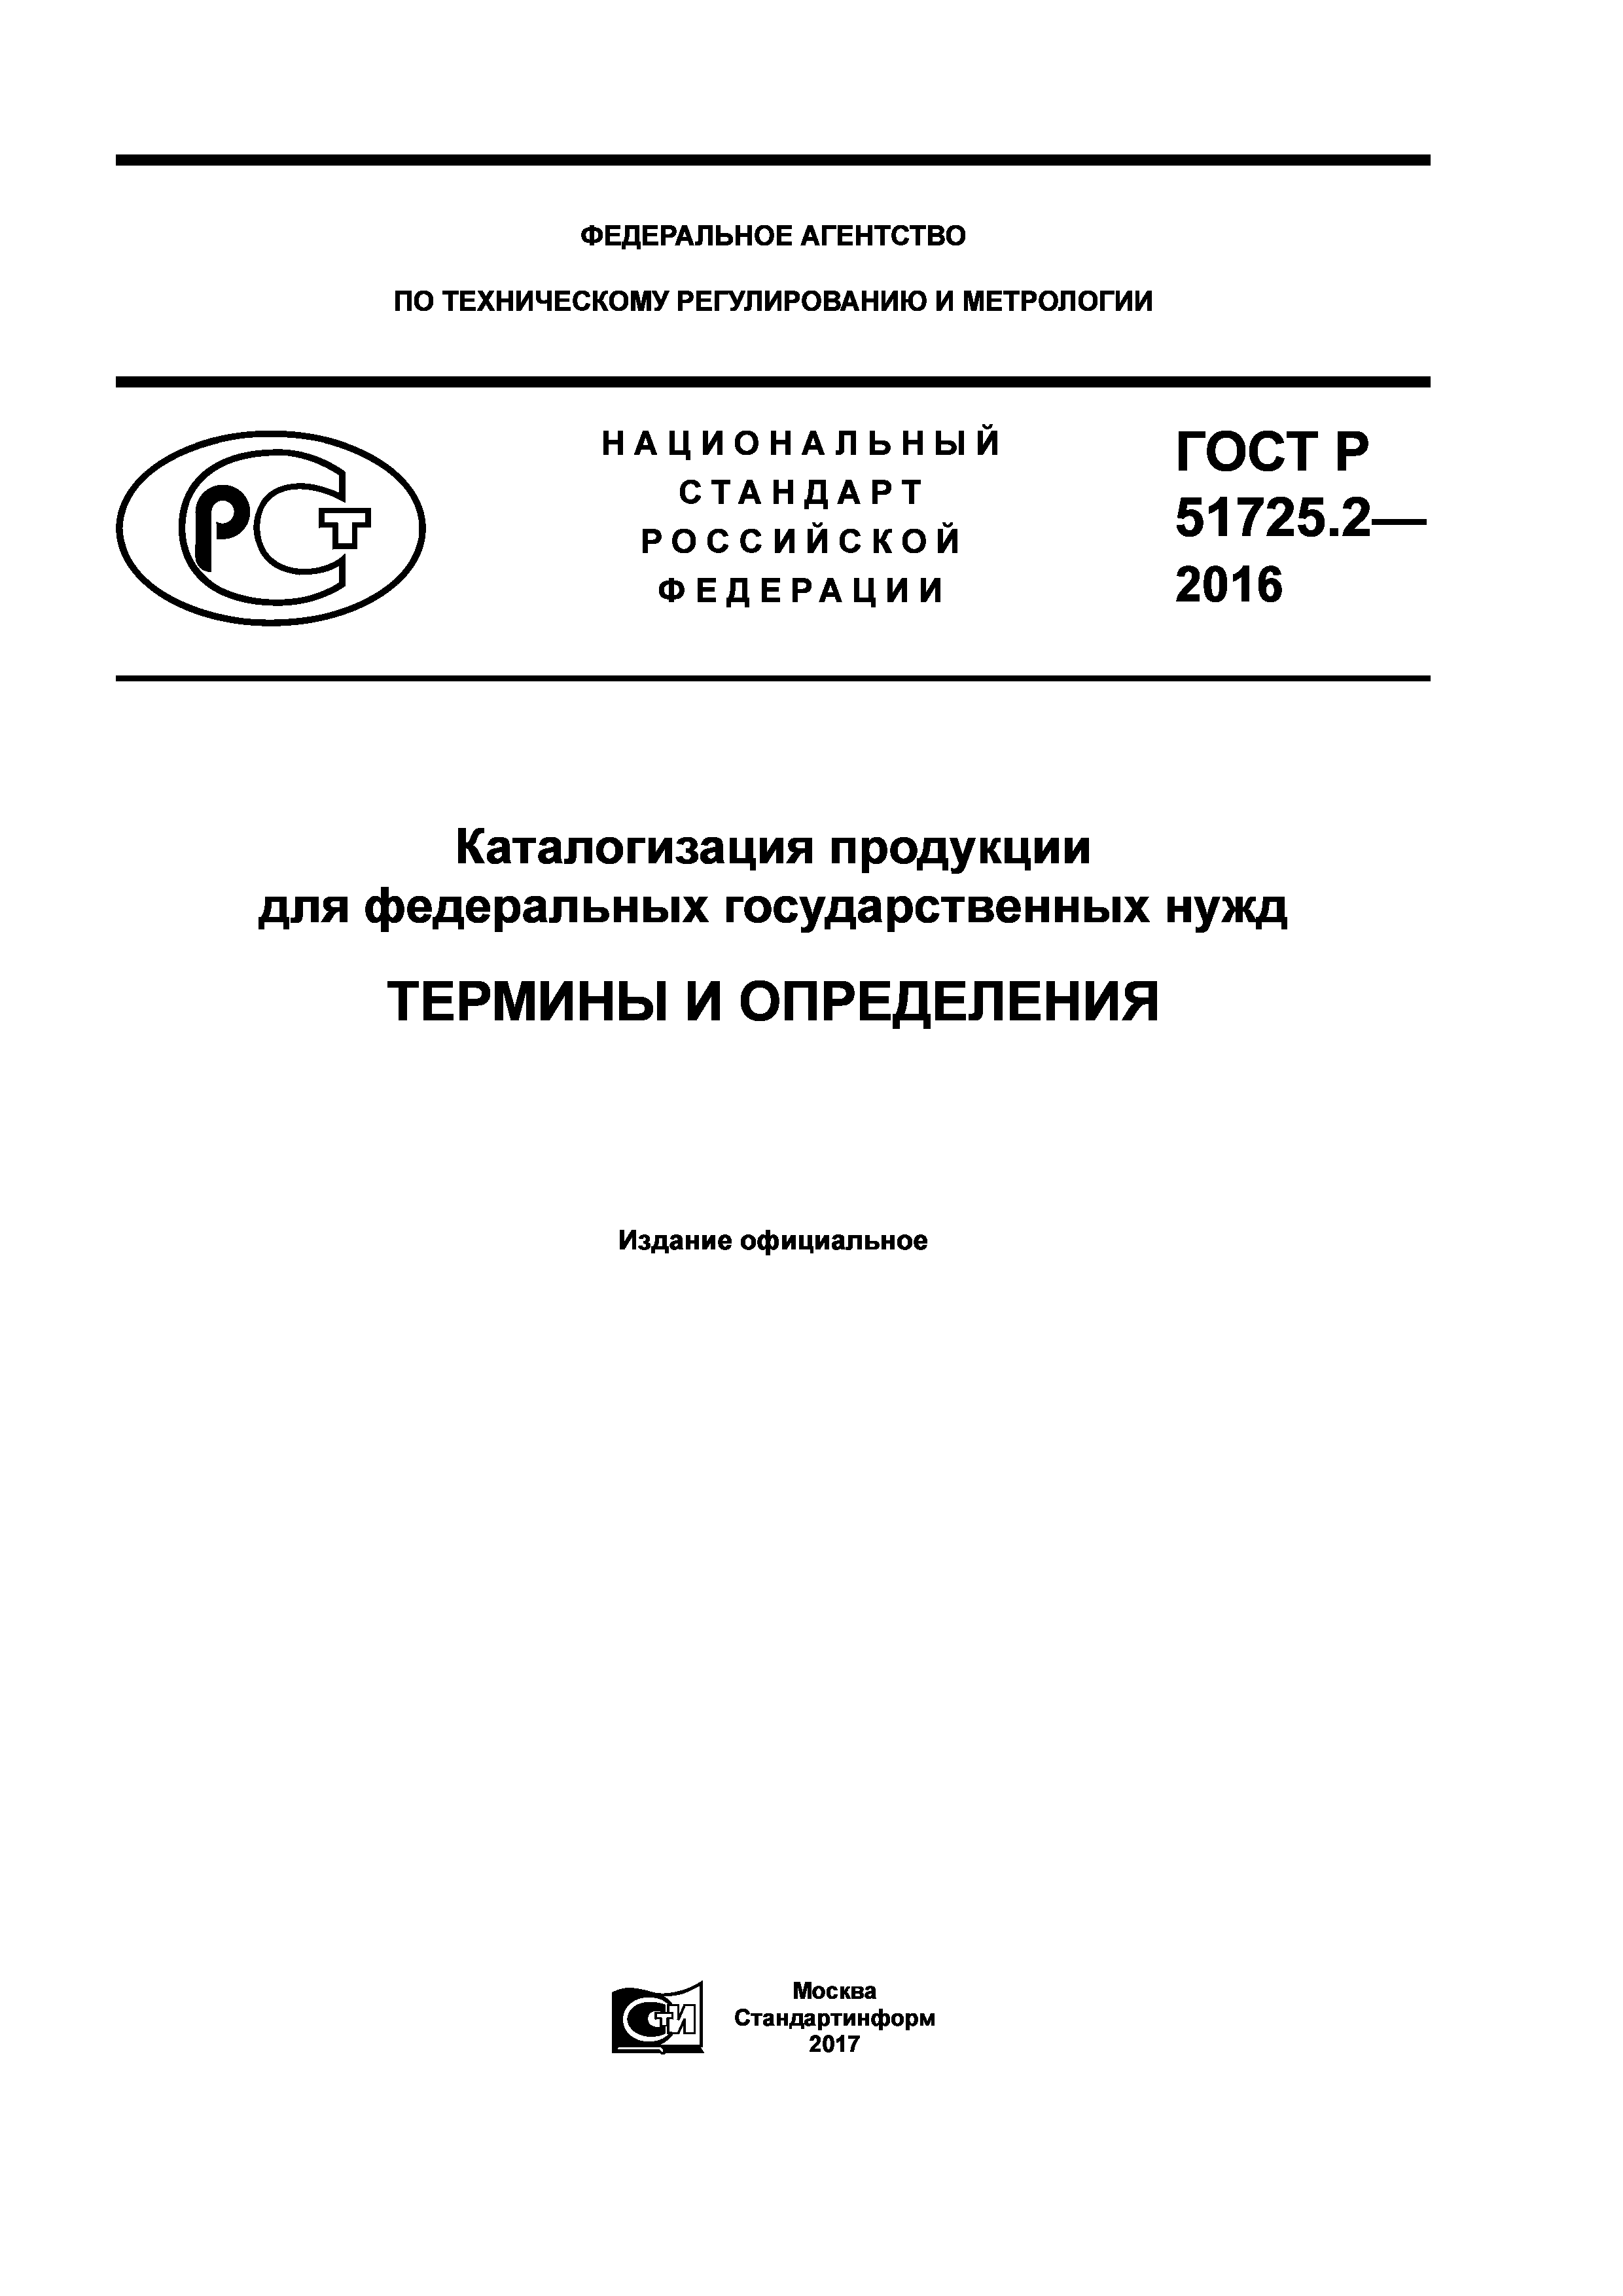 ГОСТ Р 51725.2-2016